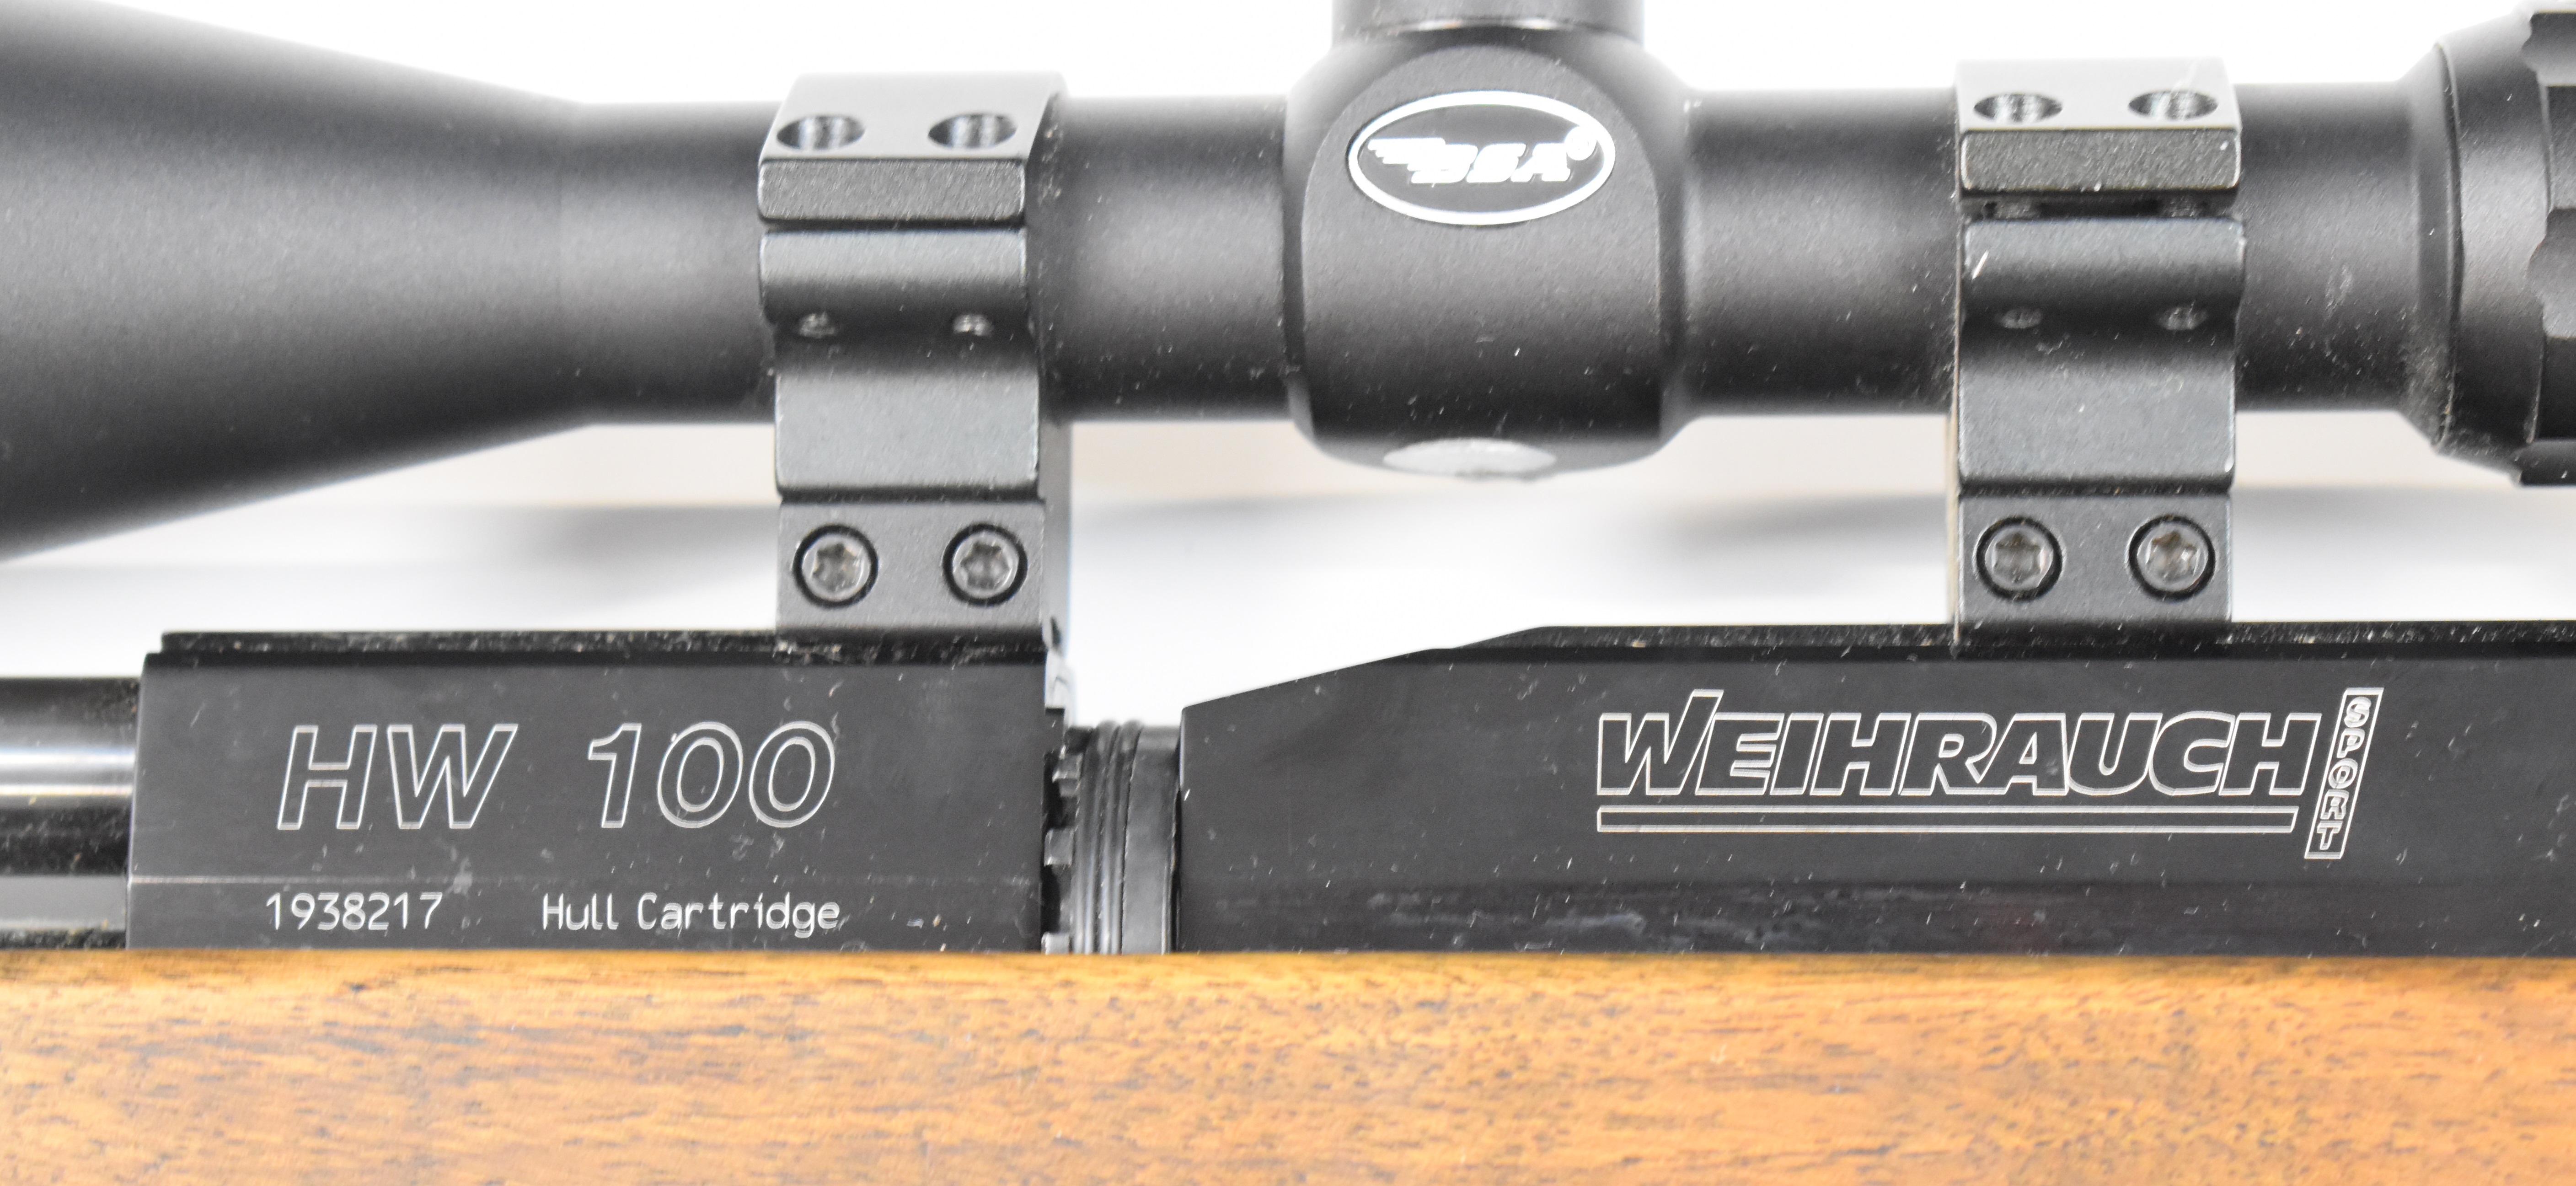 Weihrauch HW100 .22 PCP air rifle with textured semi-pistol grip, raised cheek piece, adjustable - Image 10 of 11